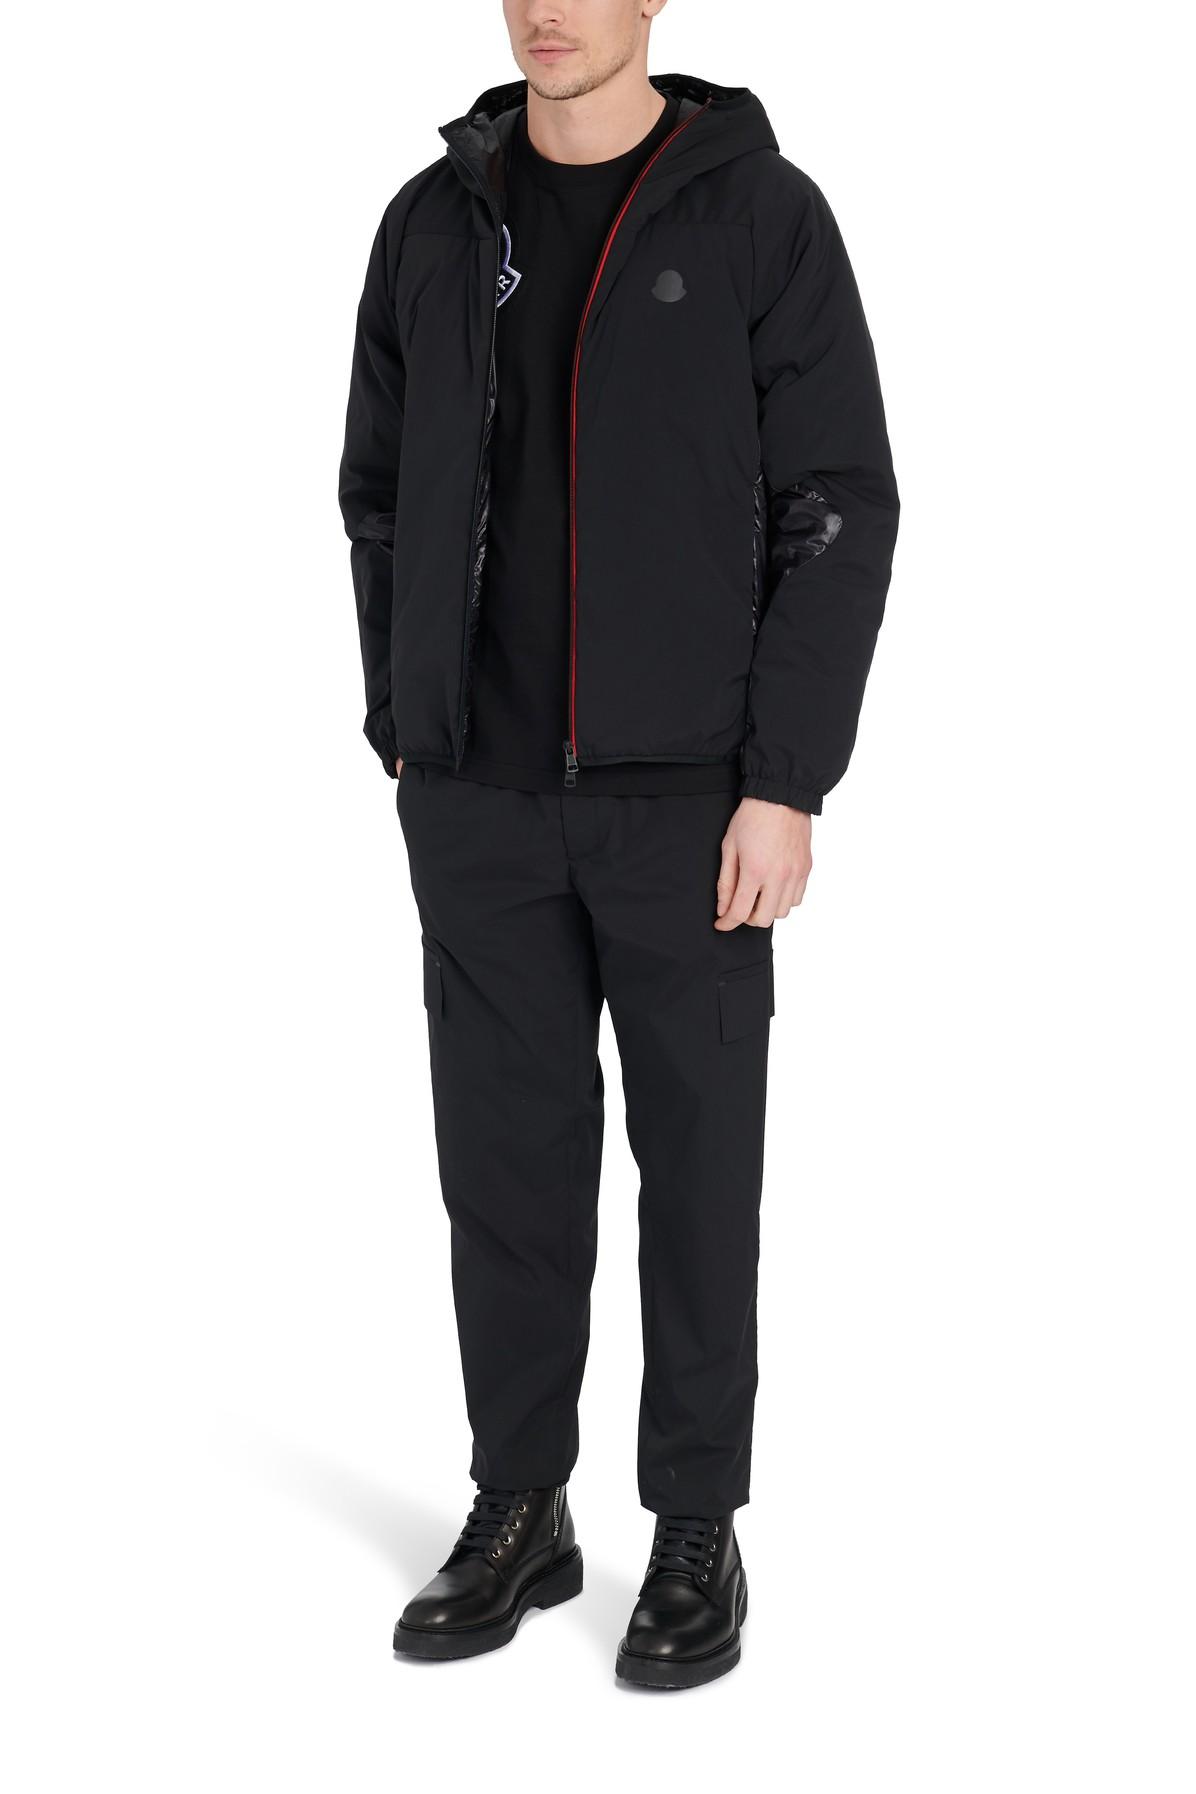 Moncler Genius X 1952 - Dalgopol Jacket in Black for Men - Lyst